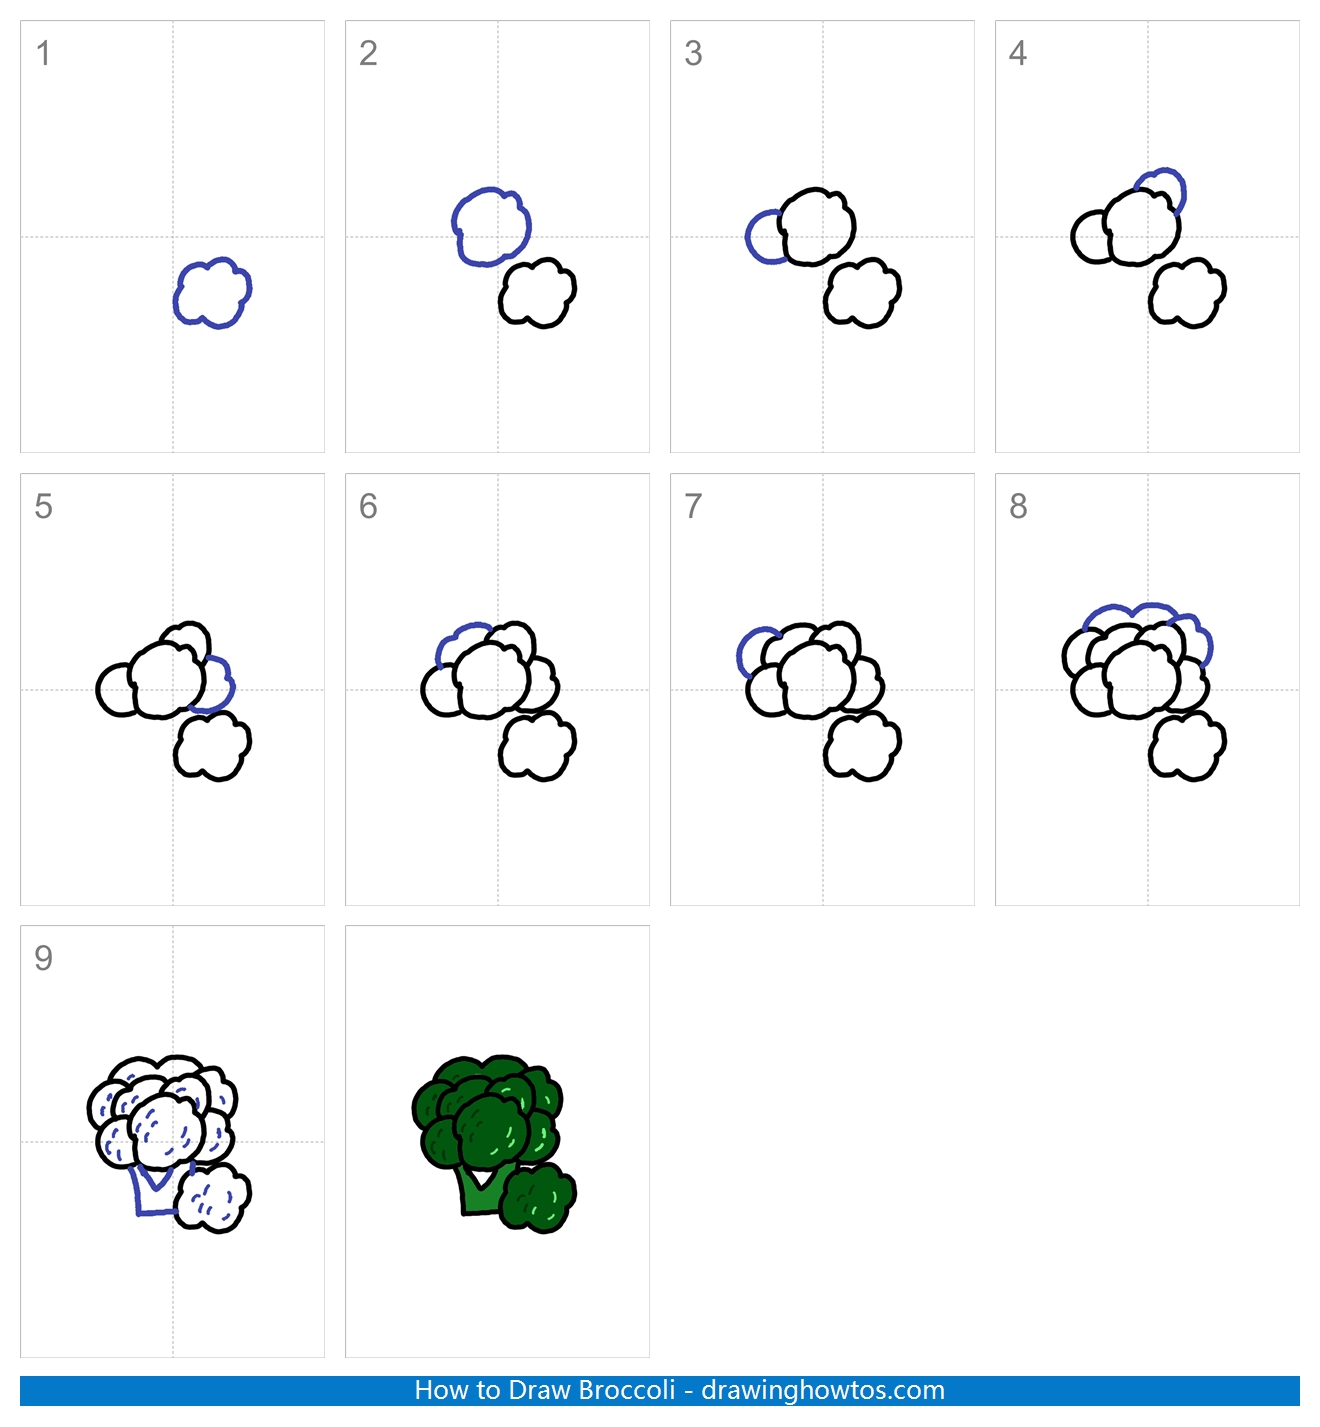 How to Draw Broccoli Step by Step